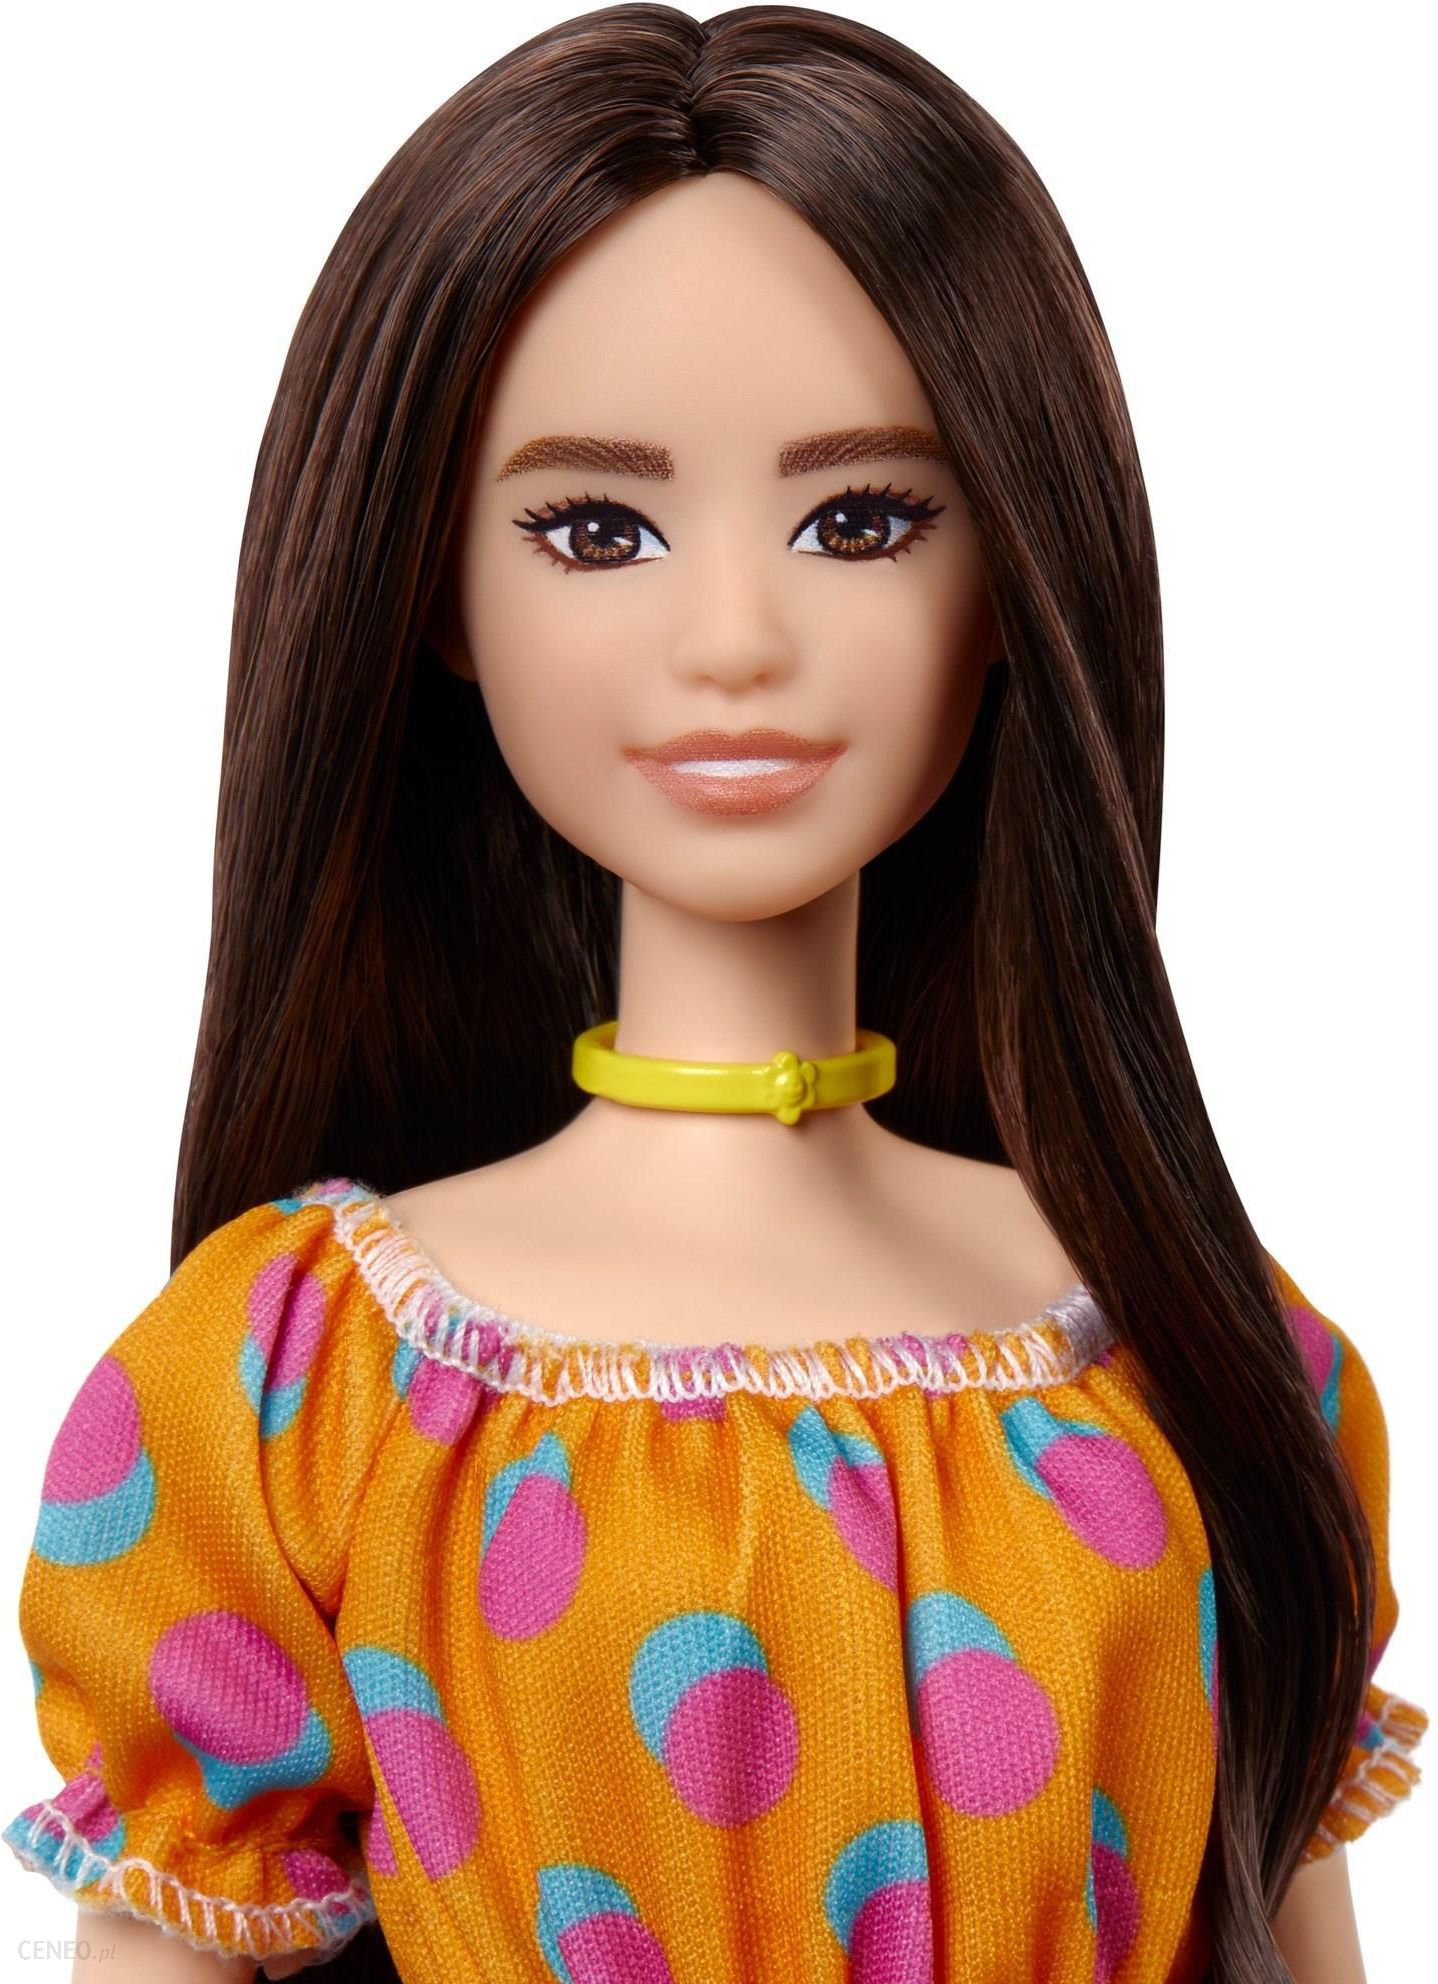 Barbie Fashionistas - Lalka 144 GYB00